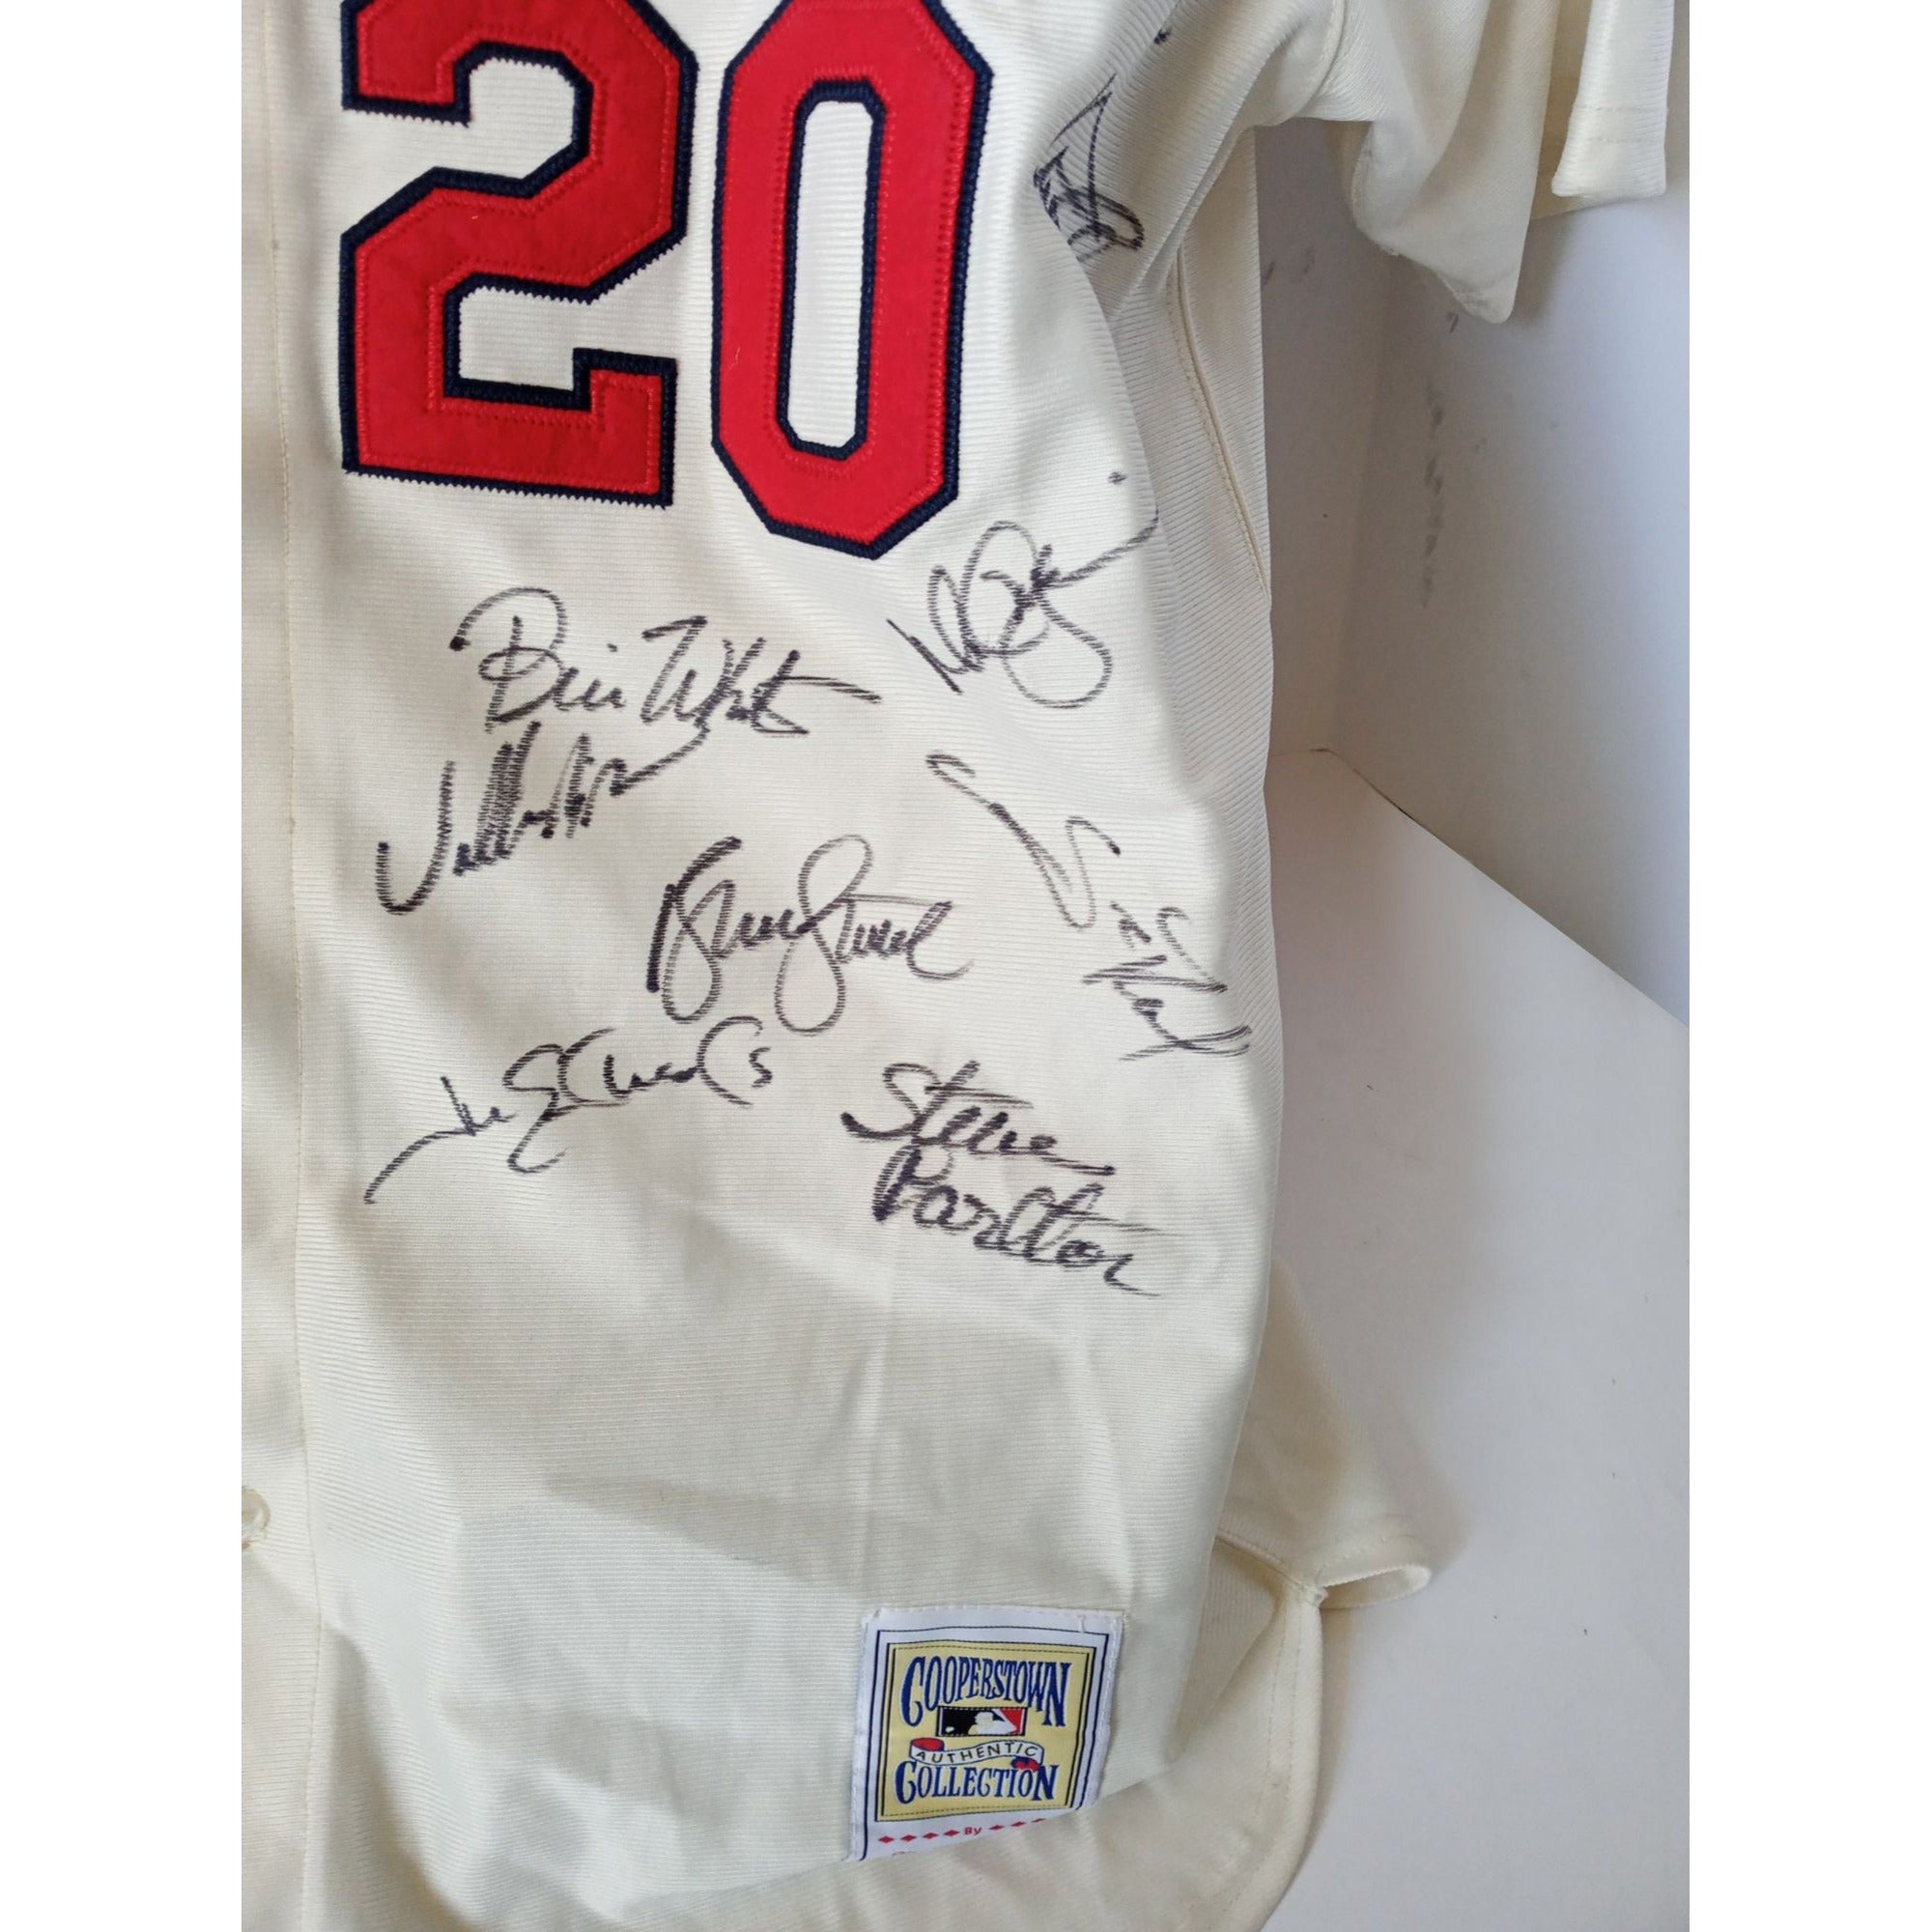 Lou Brock St. Louis Cardinals Signed Autograph Custom Jersey